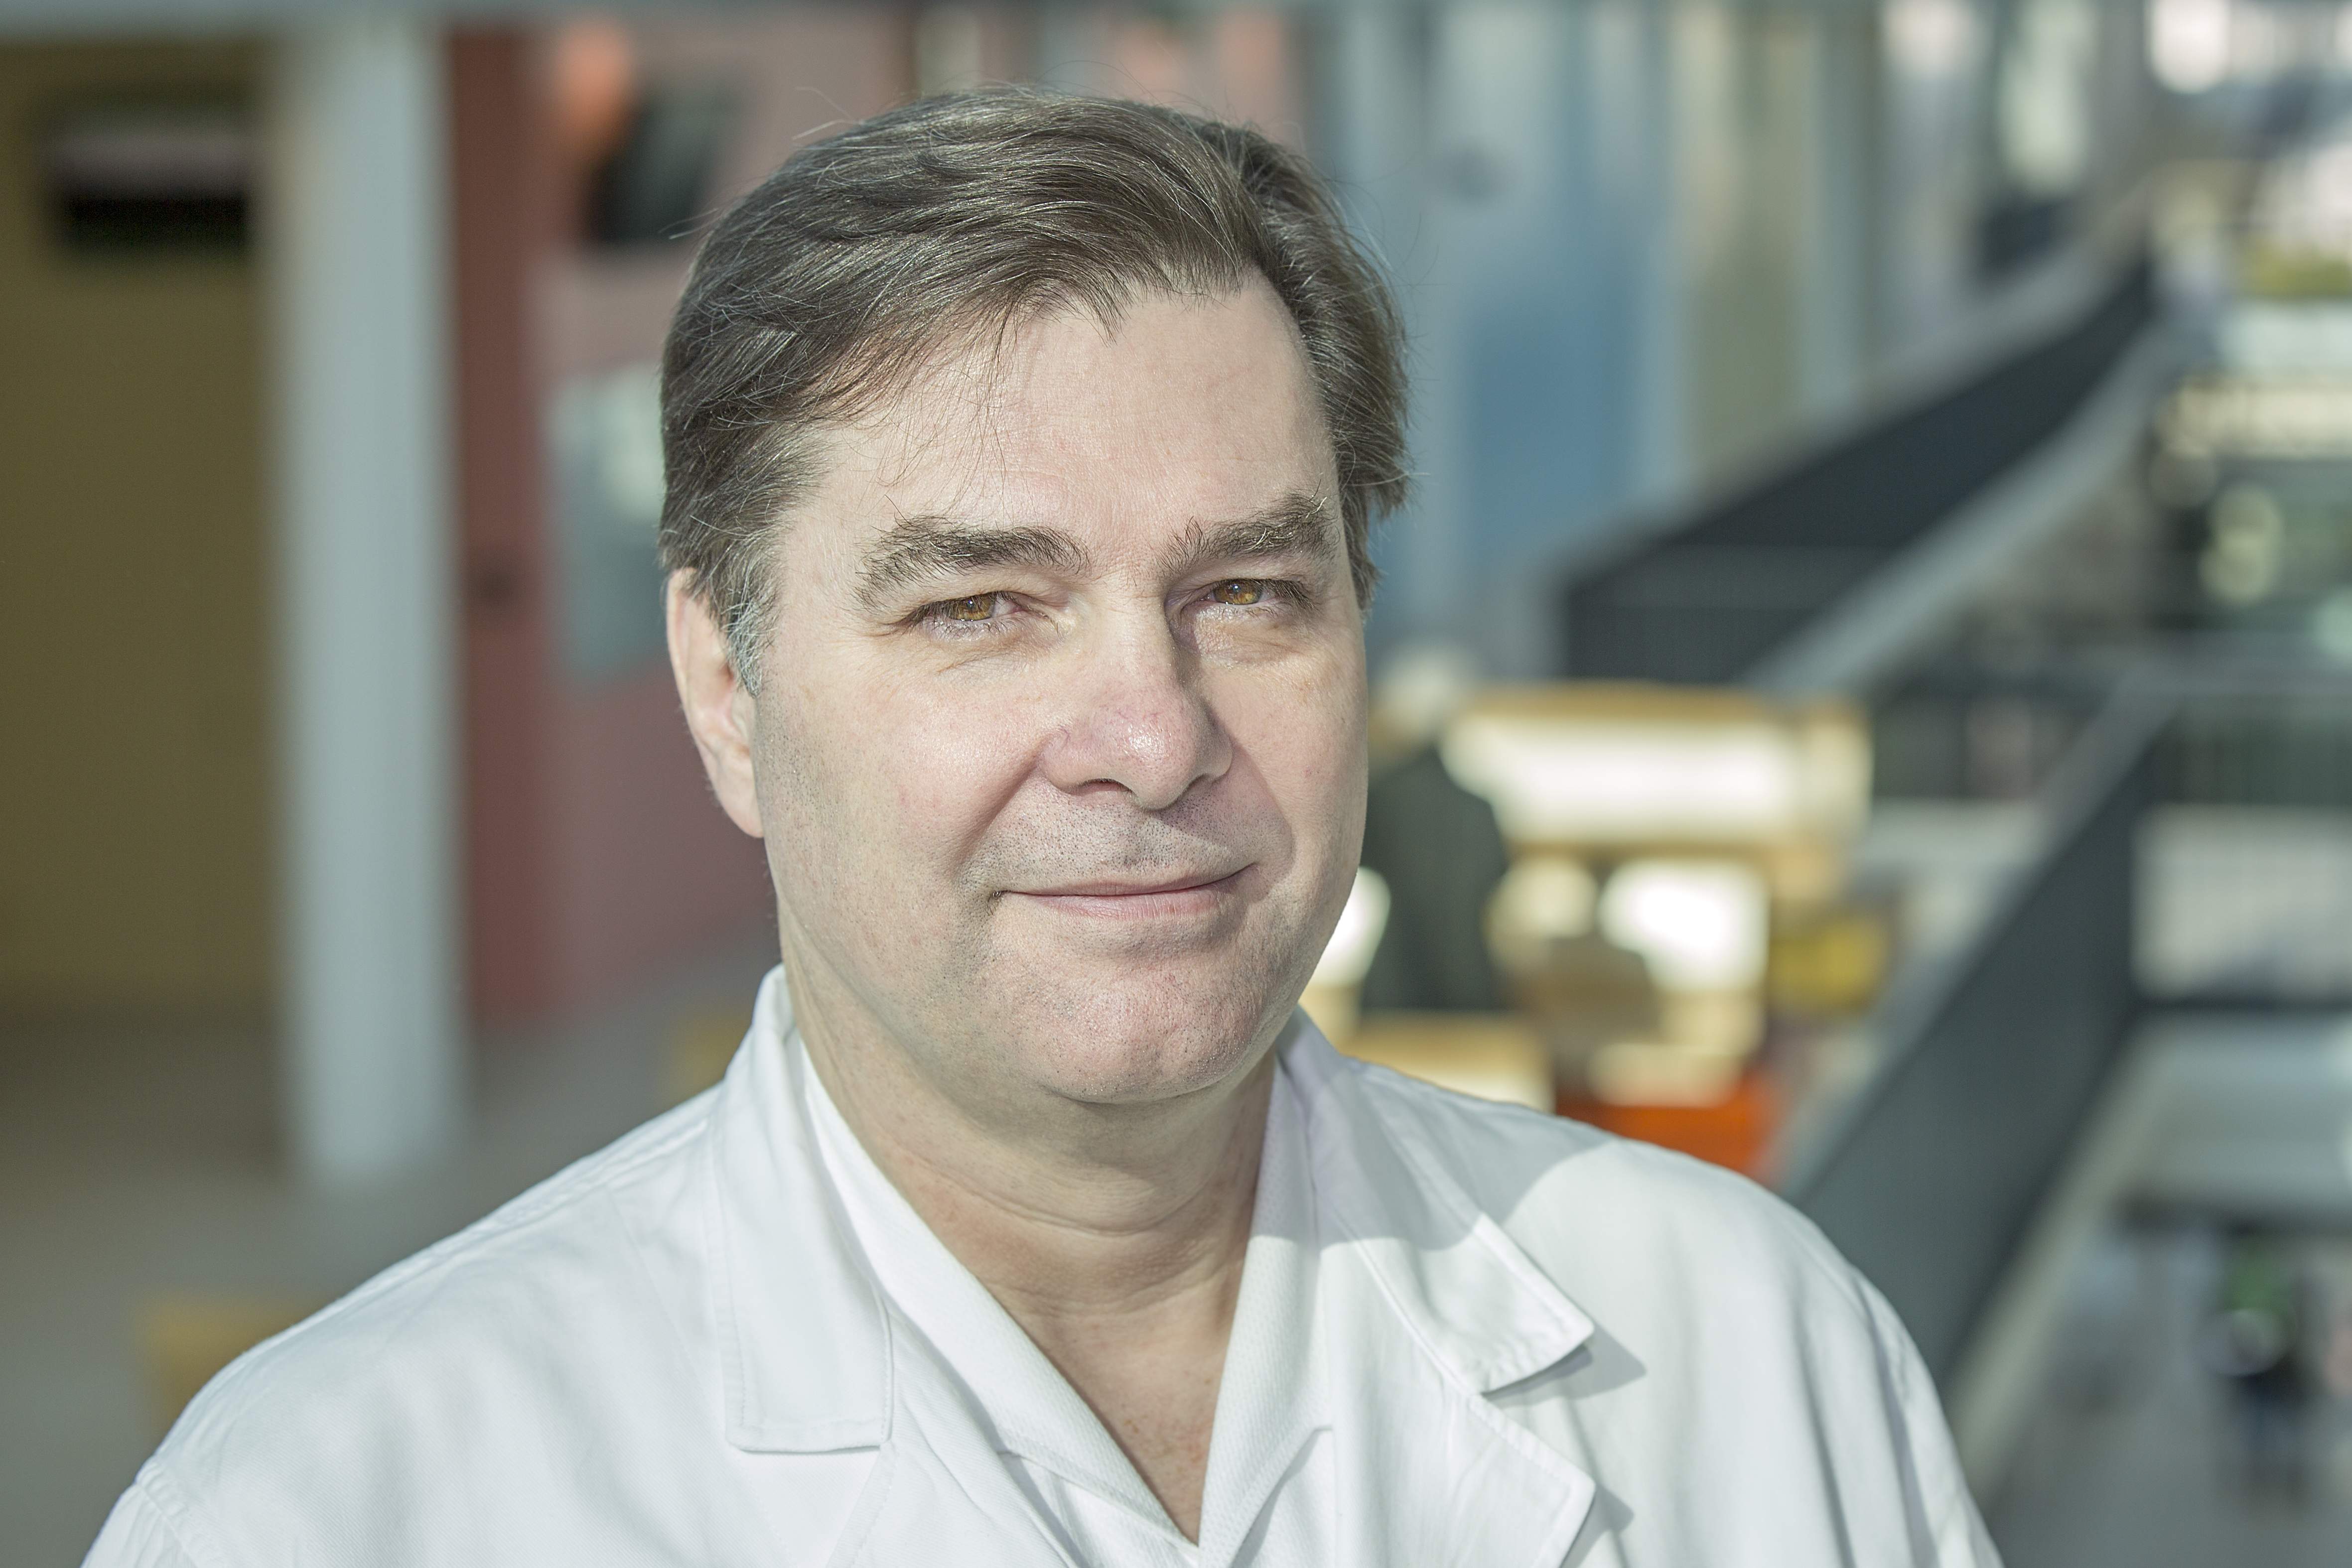 Ao.Univ. Prof. Dr. André Gahleitner, Leiter des Fachbereichs Radiologie